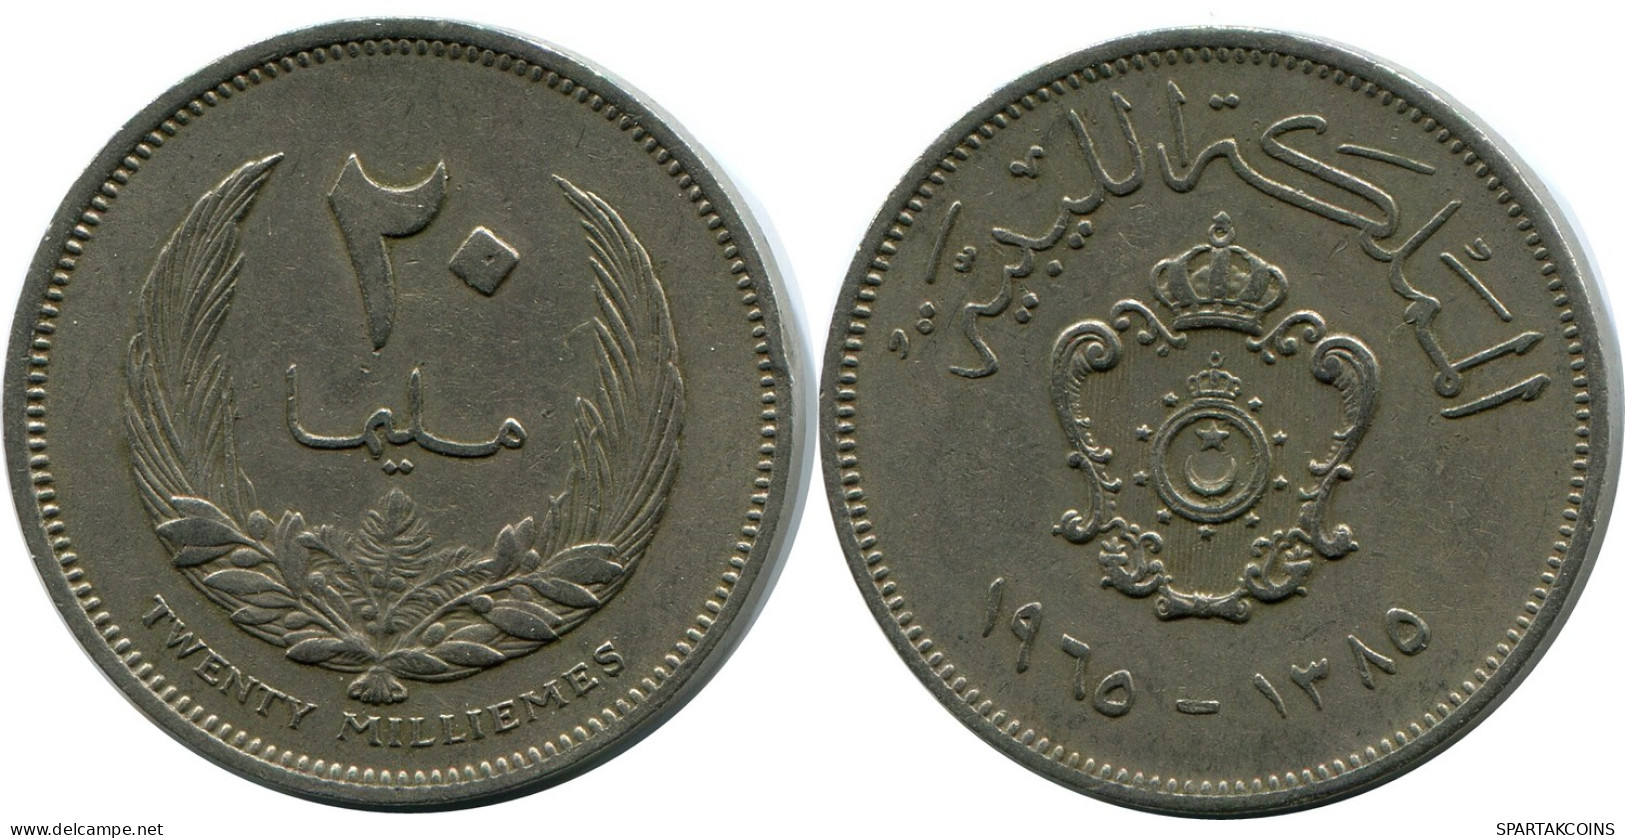 20 MILLIEMES 1965 LIBYA Islamic Coin #AK277.U - Libyen